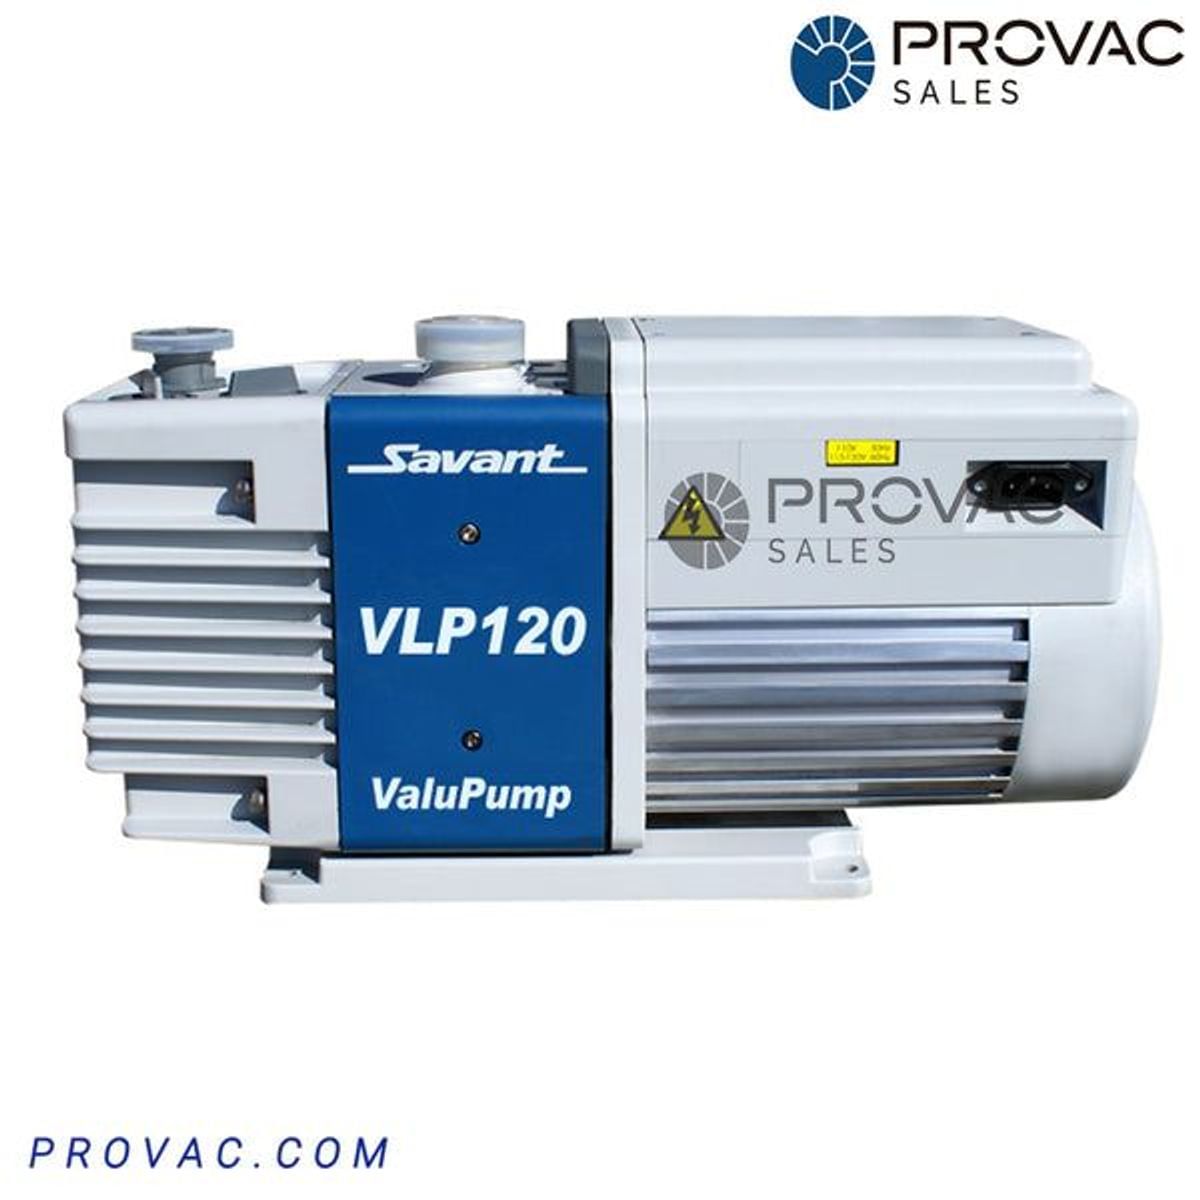 Thermo Savant VLP-120 Rotary Vane Pump, Rebuilt Image 1